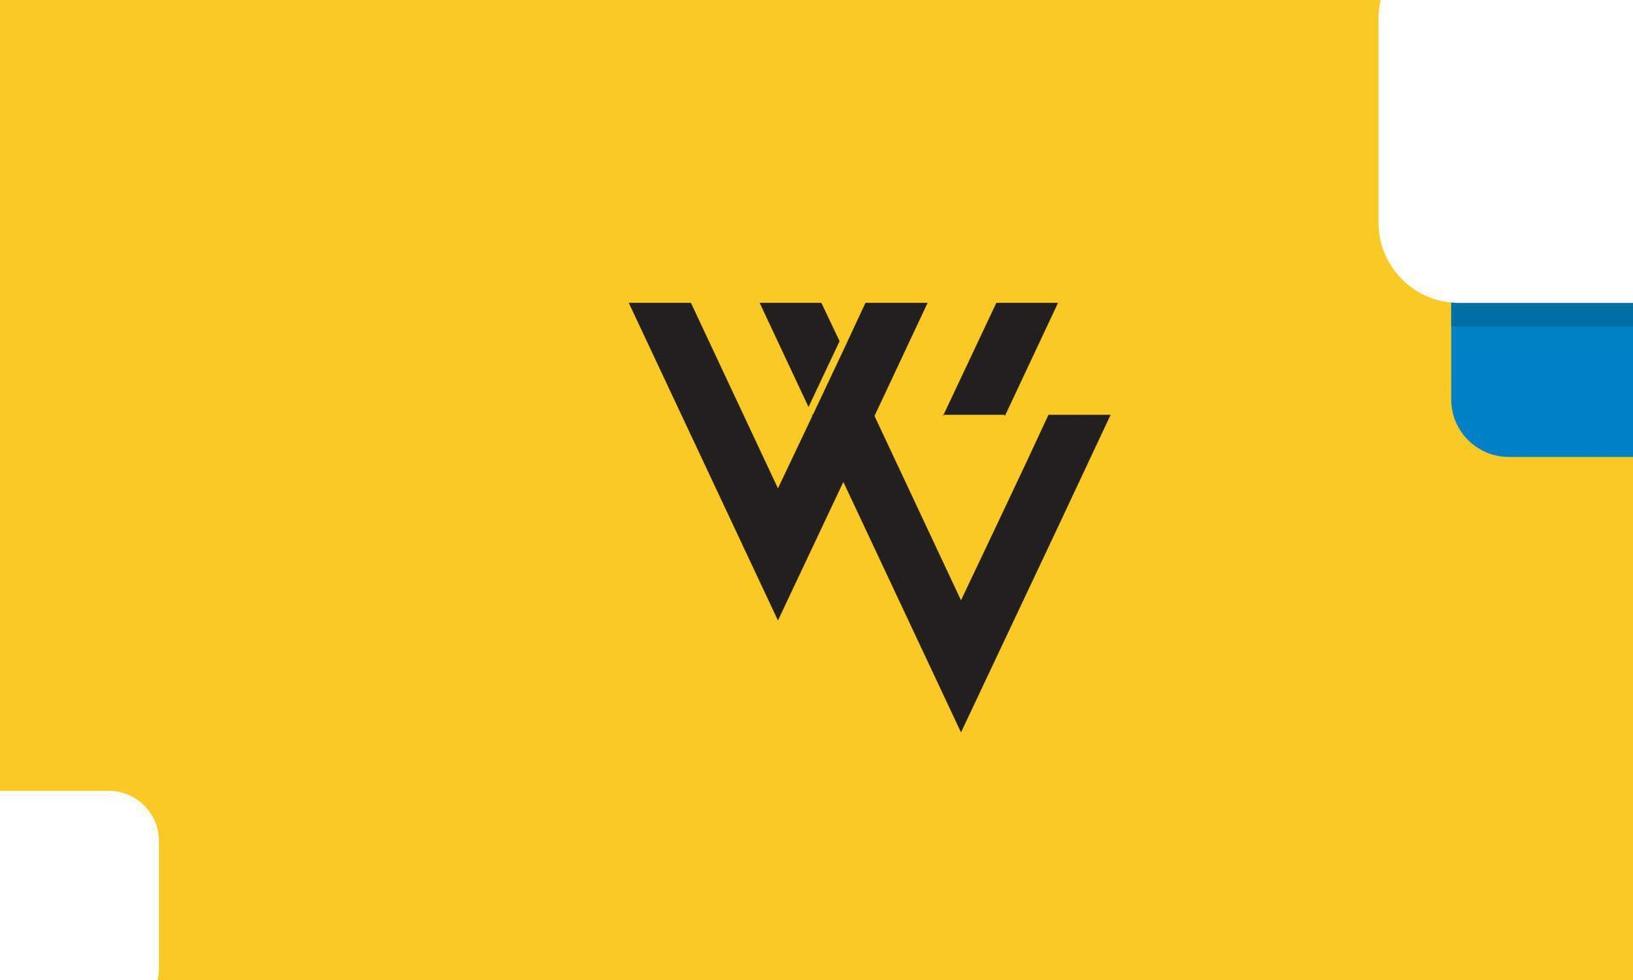 alfabet letters initialen monogram logo wv, vw, w en v vector